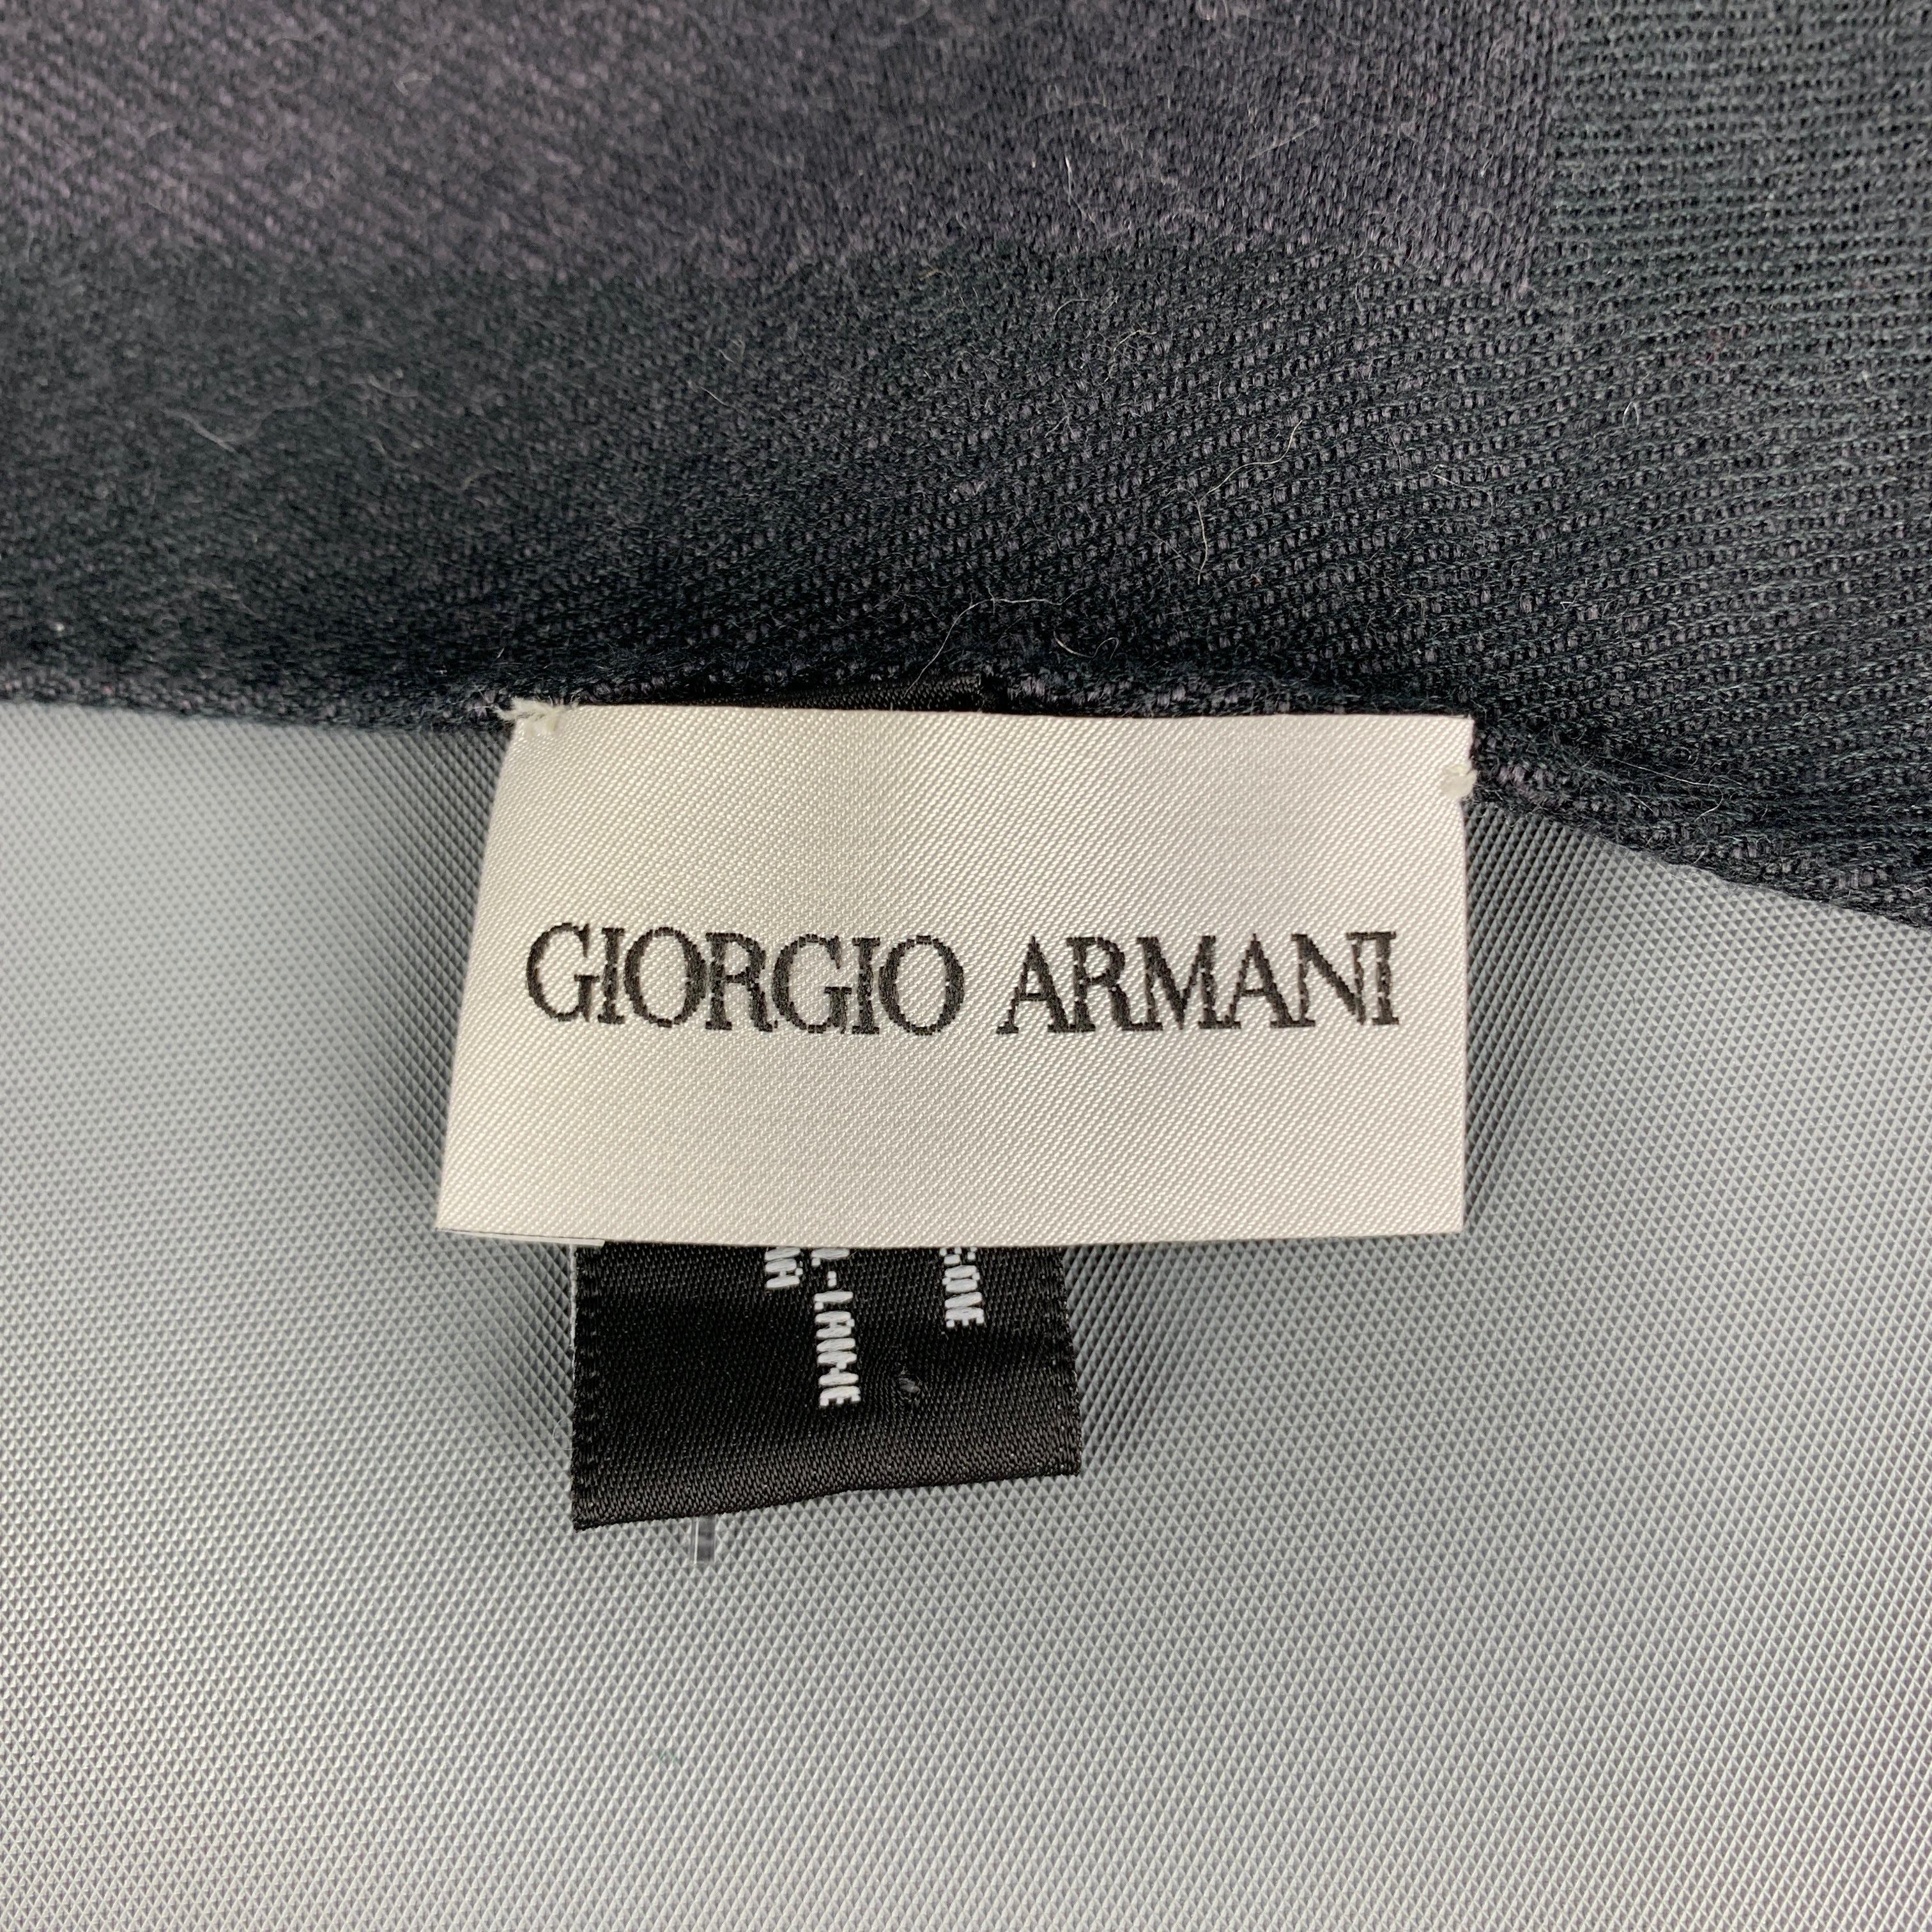 giorgio armani scarves